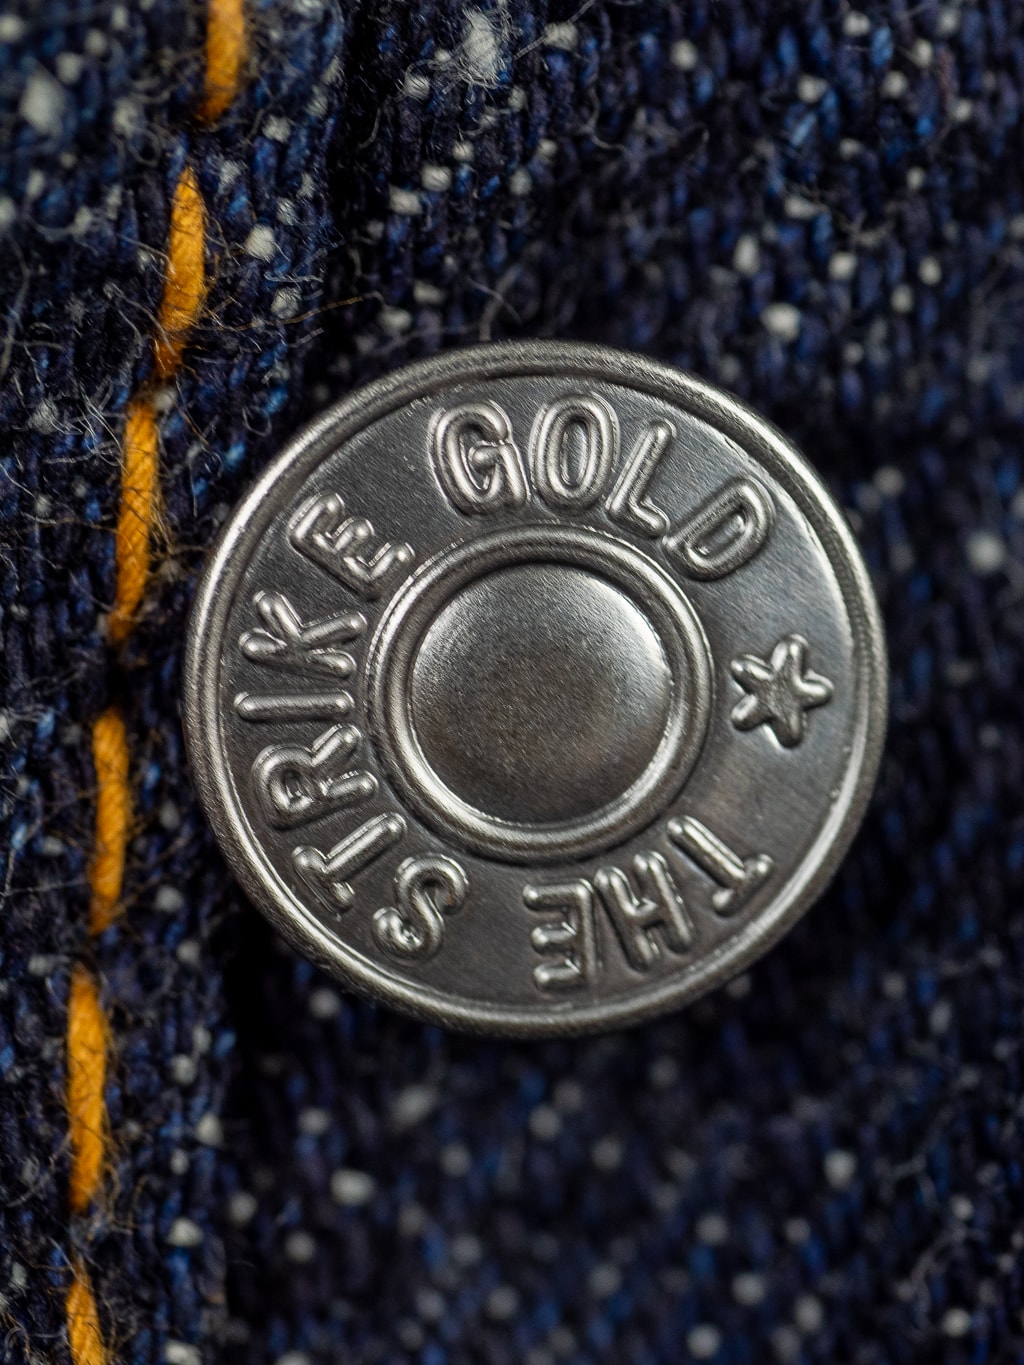 The Strike Gold Keep Earth Natural Indigo Jeans custom button